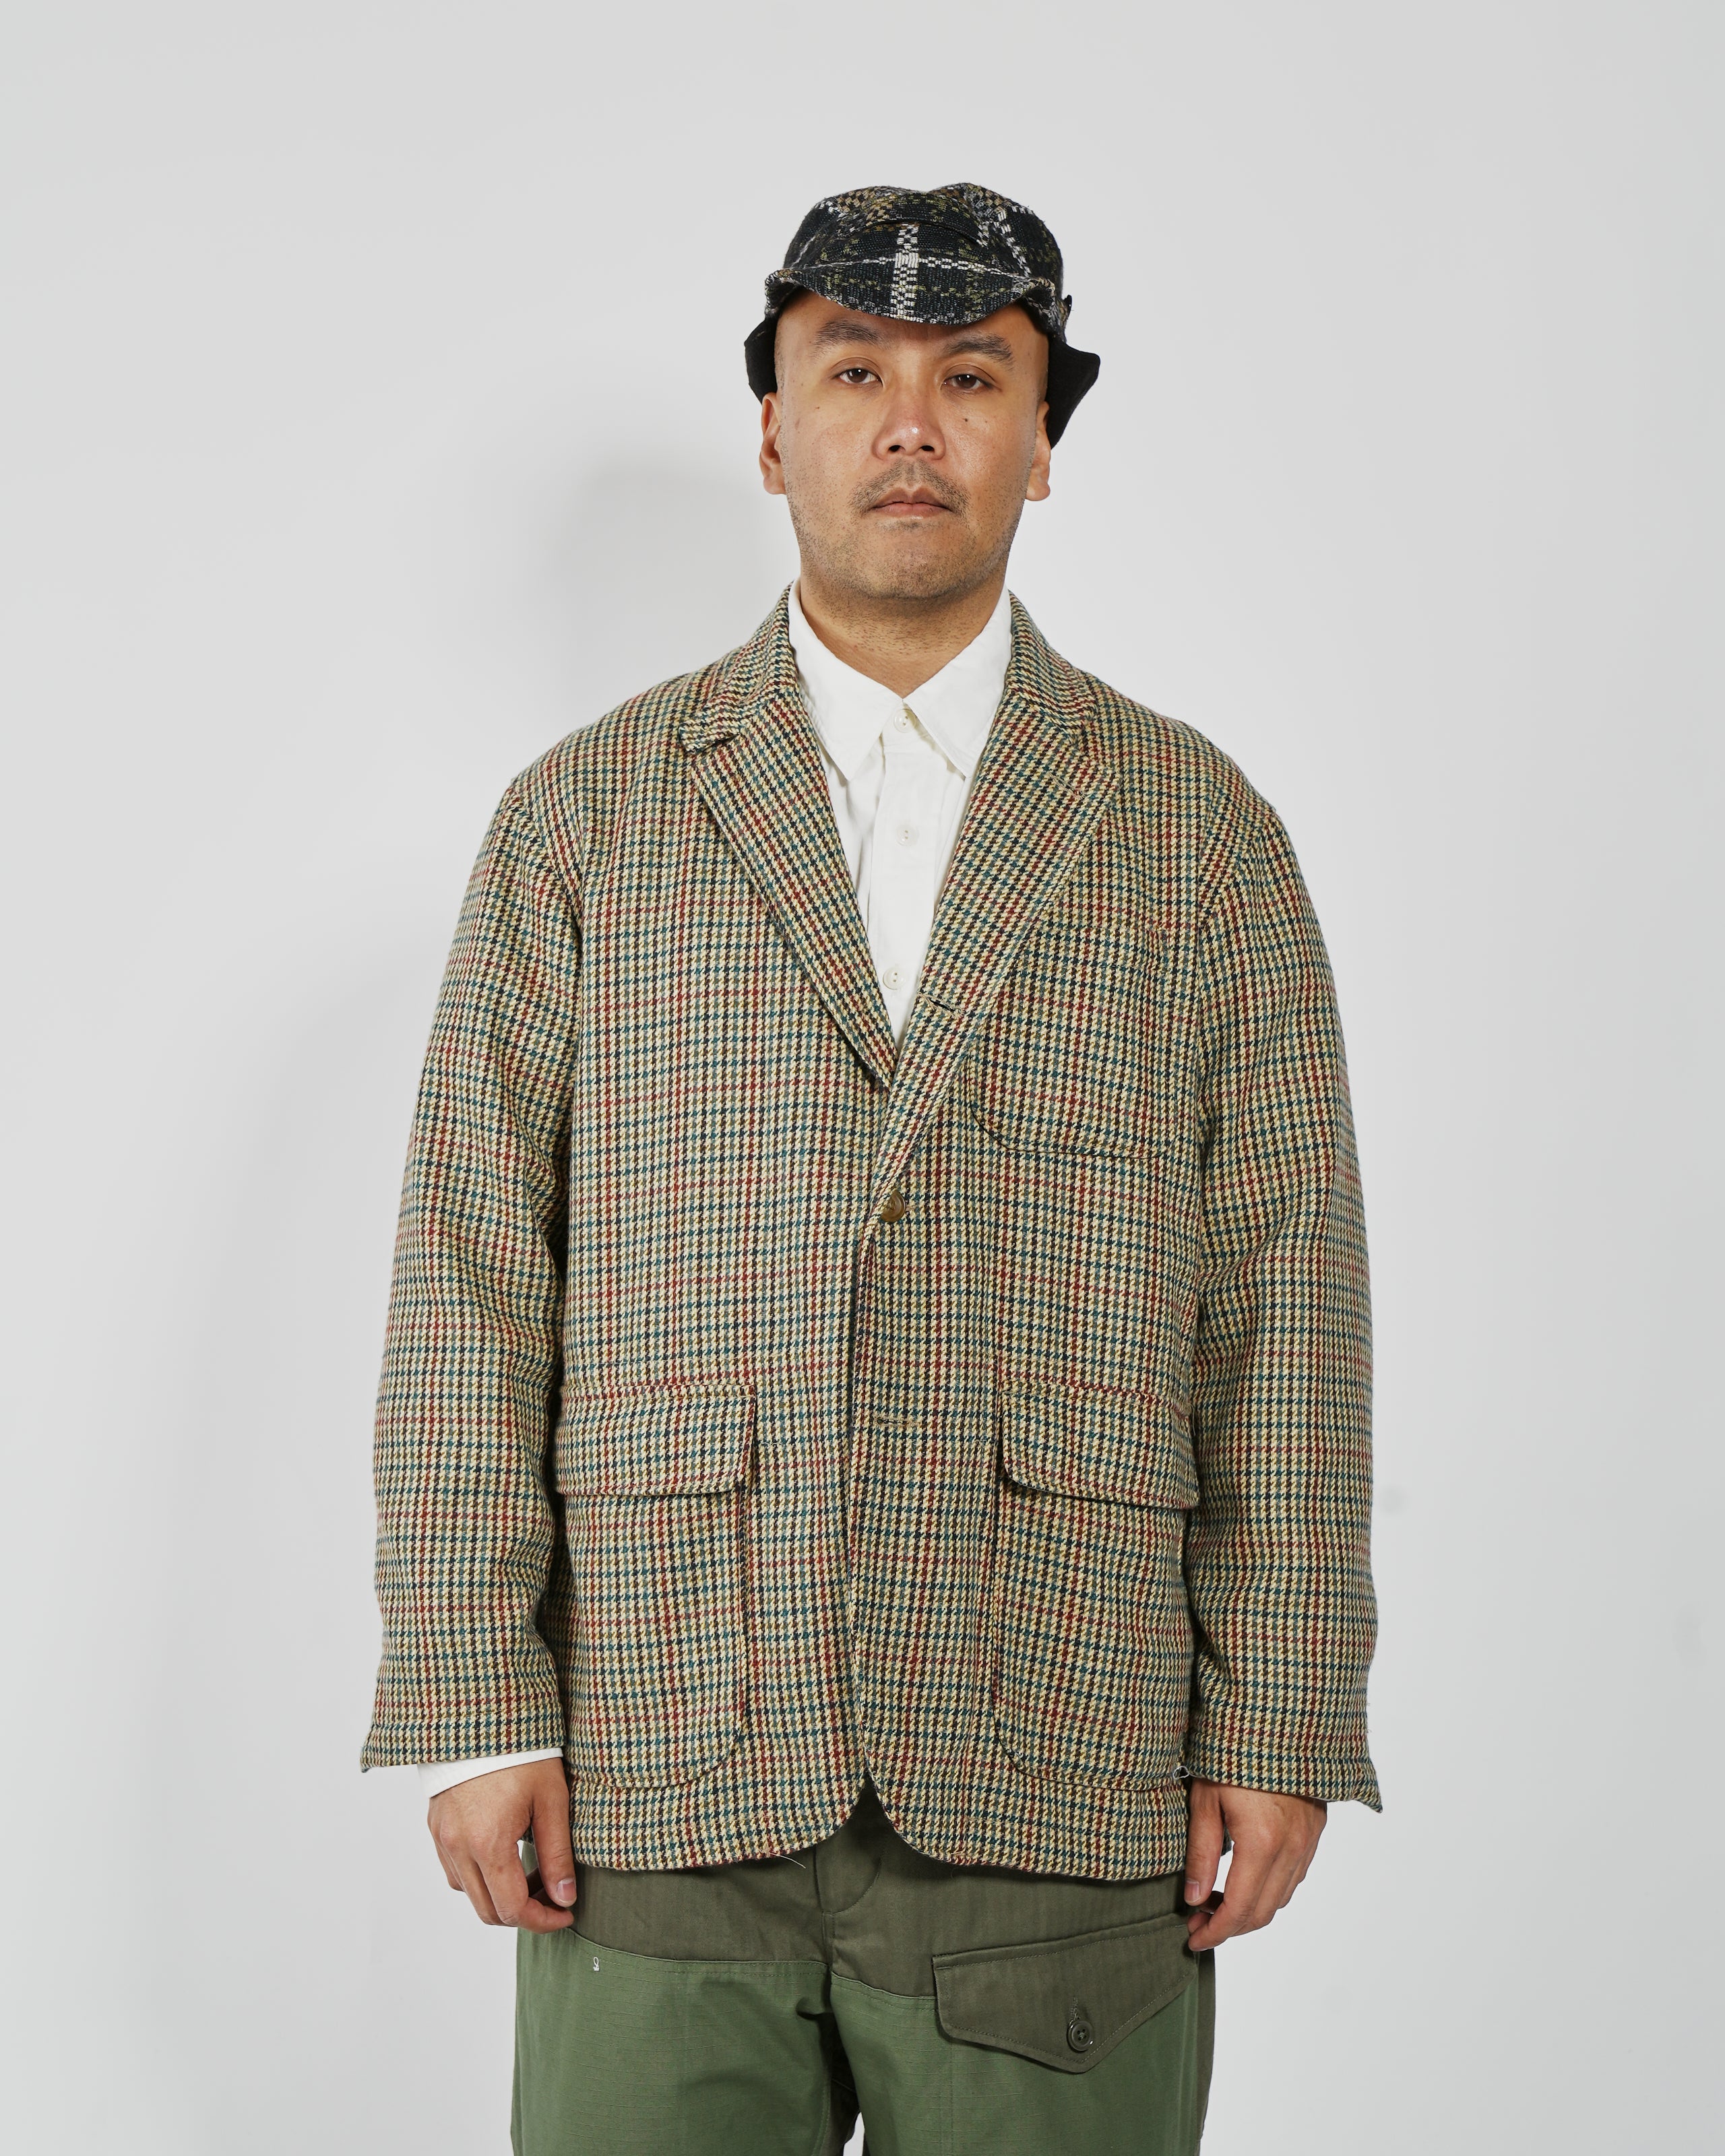 Loiter Jacket - Khaki Acrylic Wool Gunclub Check